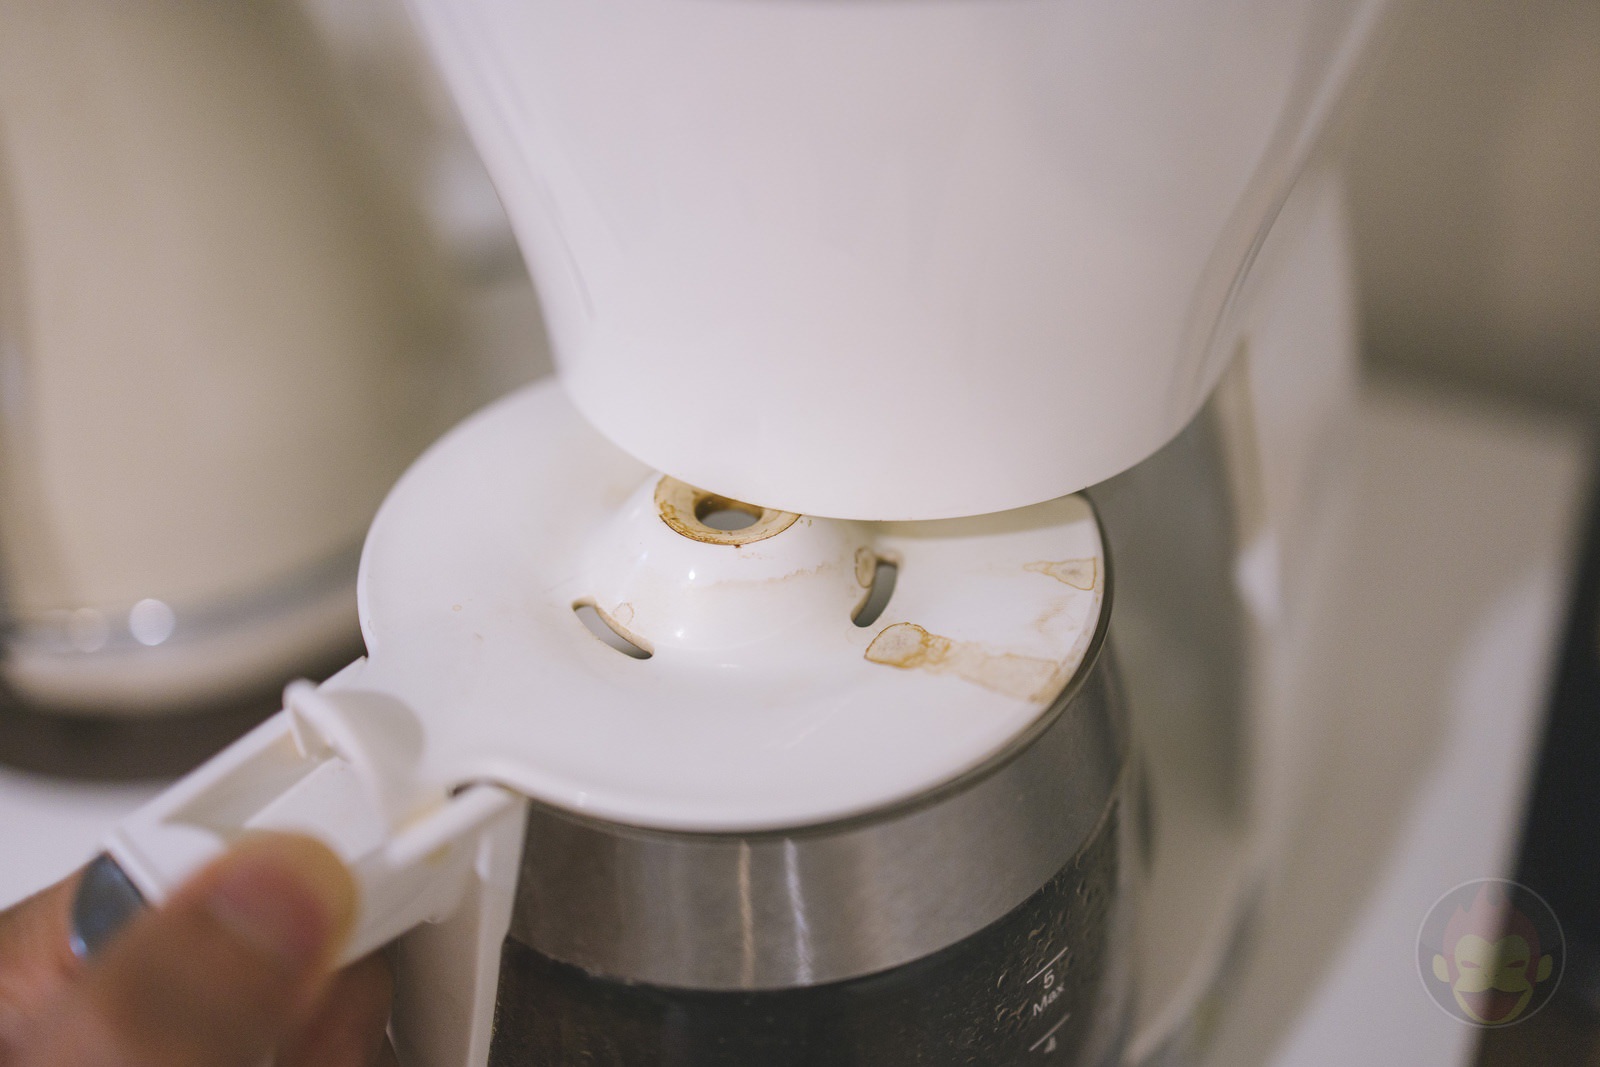 DeLonghi-Coffee-maker-very-bad-quality-03.jpg